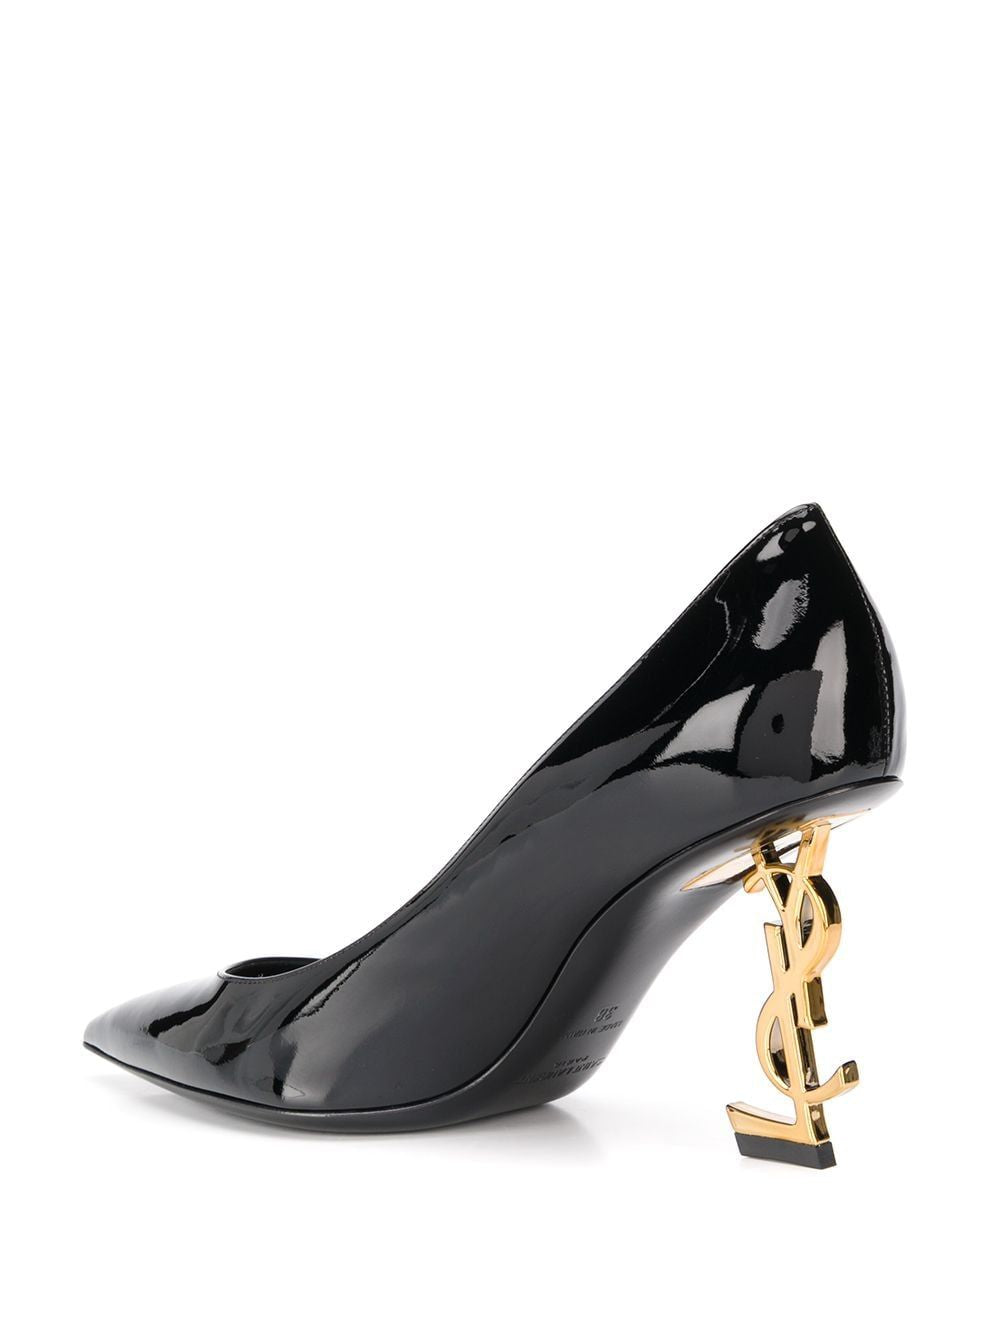 SAINT LAURENT Sleek Black Leather Pumps with Sculptural Gold-Tone Heels for Women - Carryover 2024